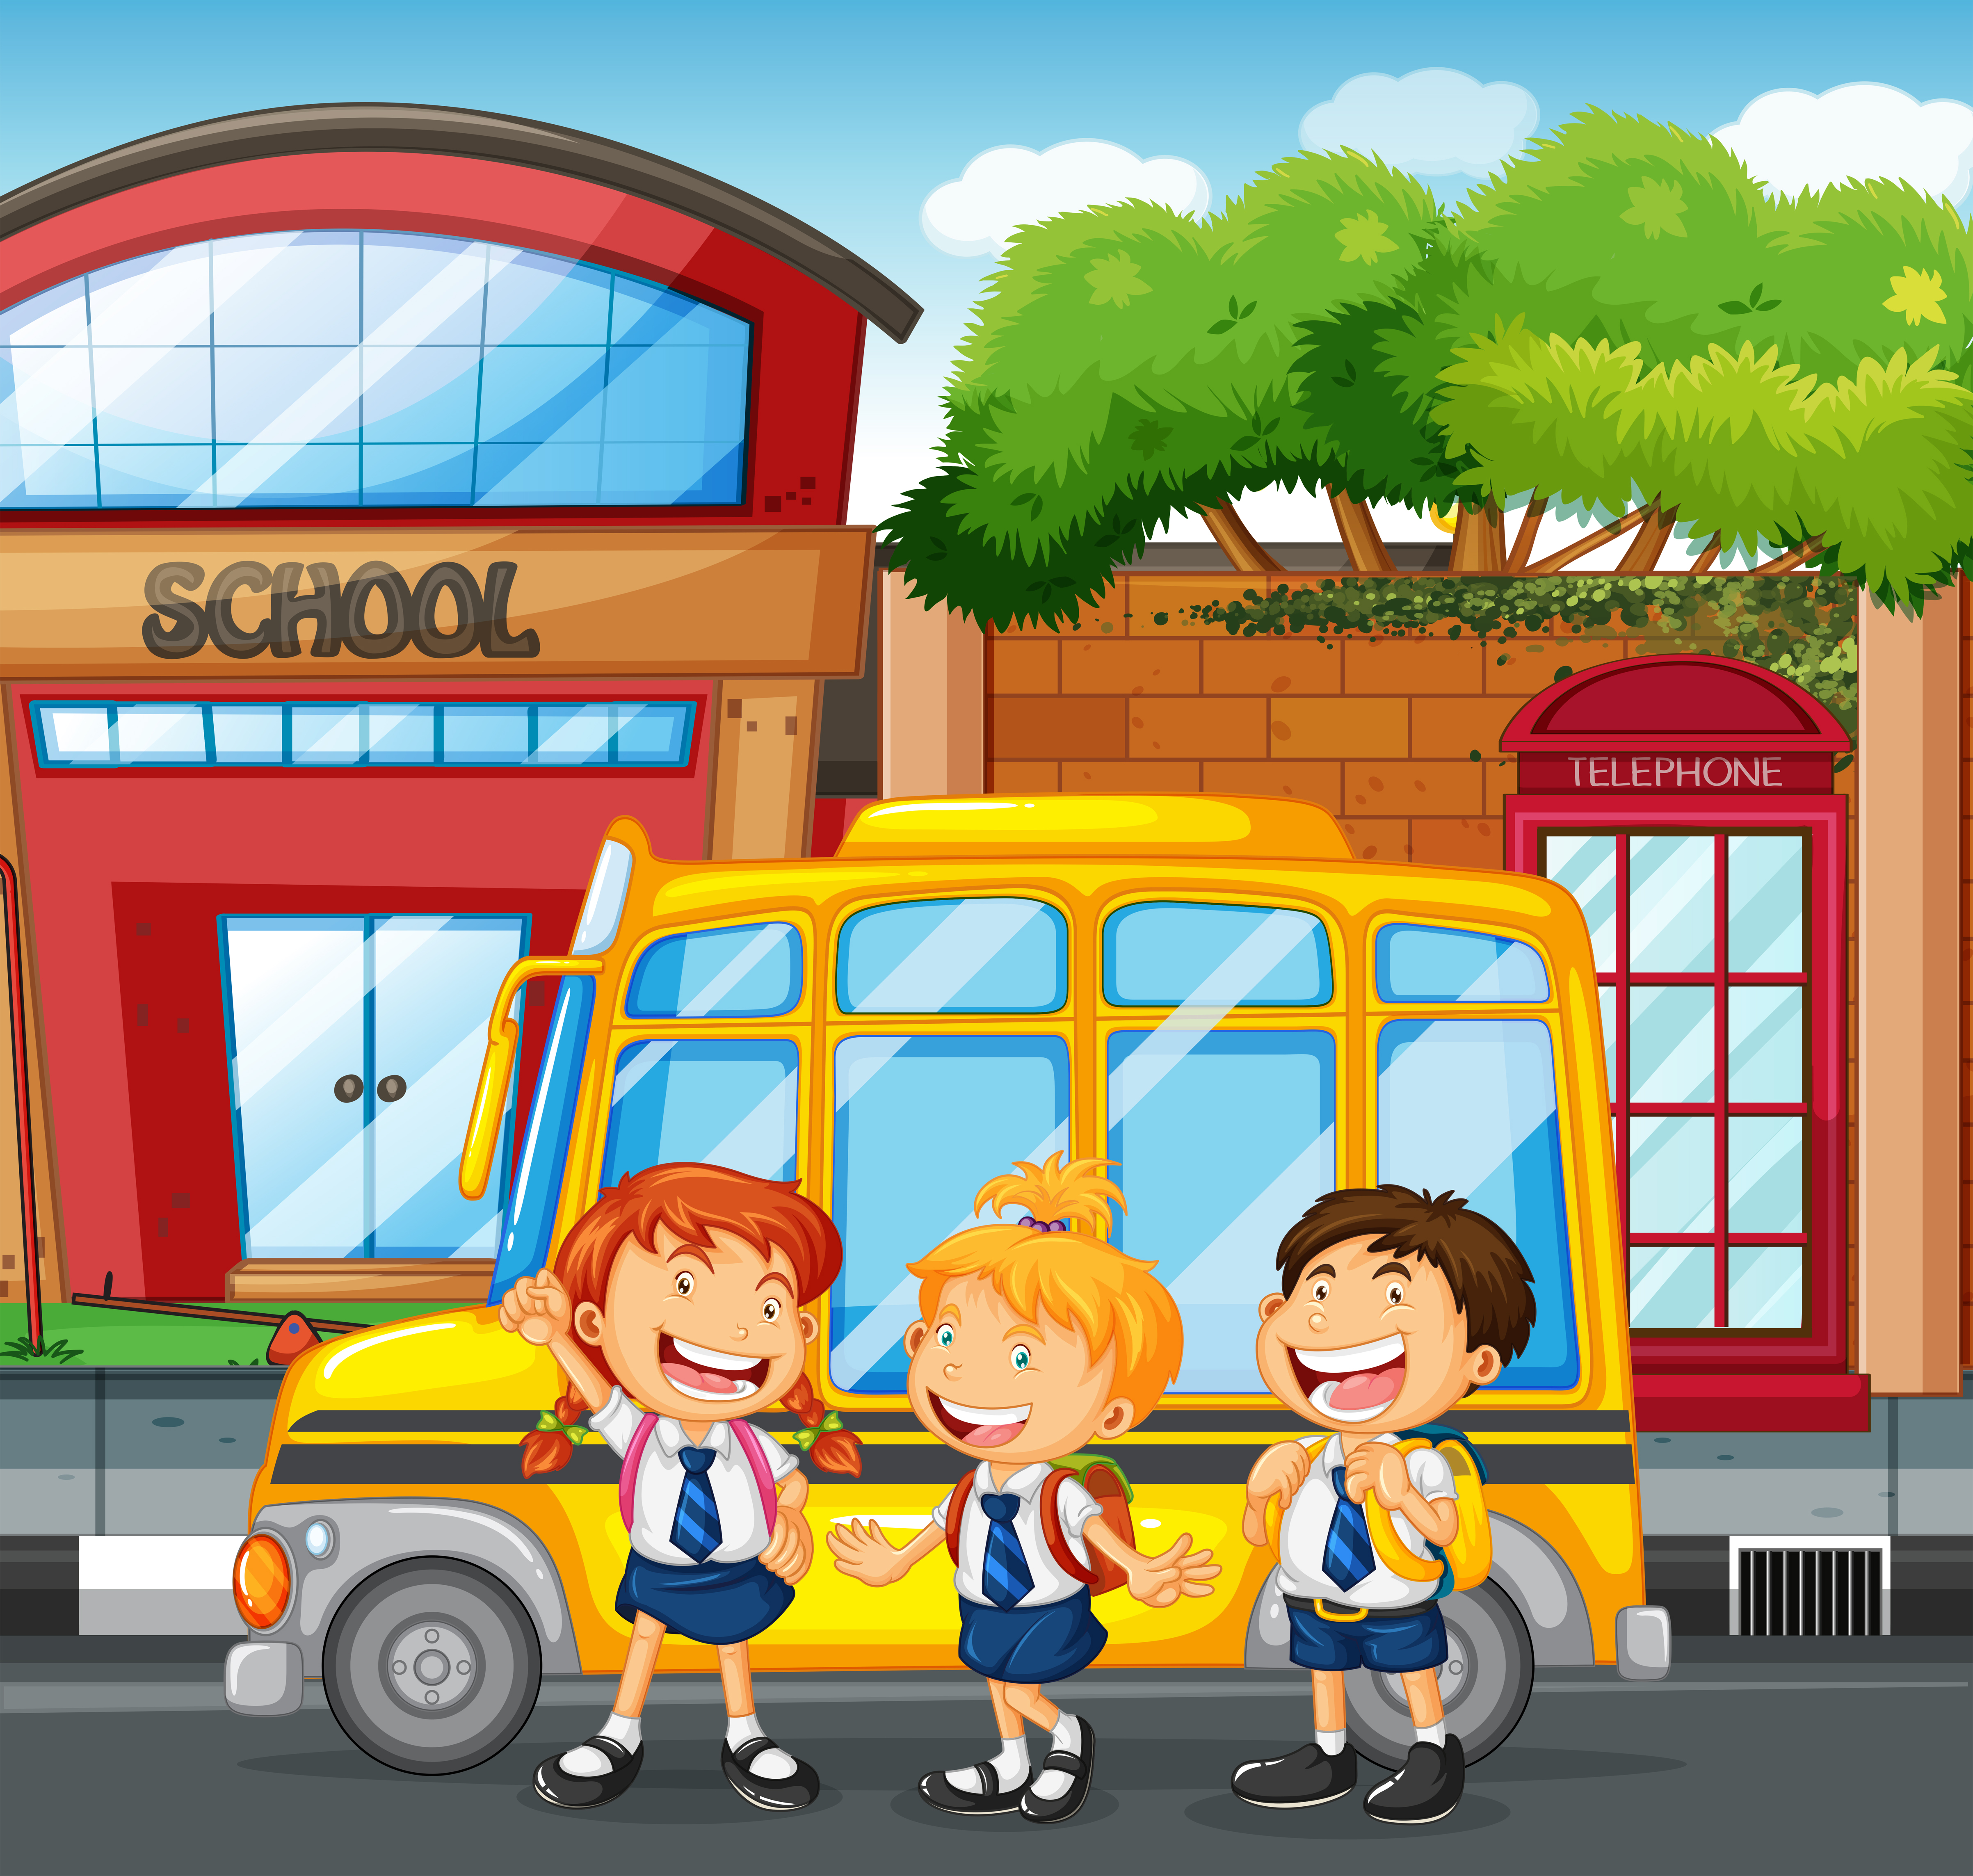 School is waiting. Школьник едет в автобусе. School Bus illustration. The School Bus arrived at the School.